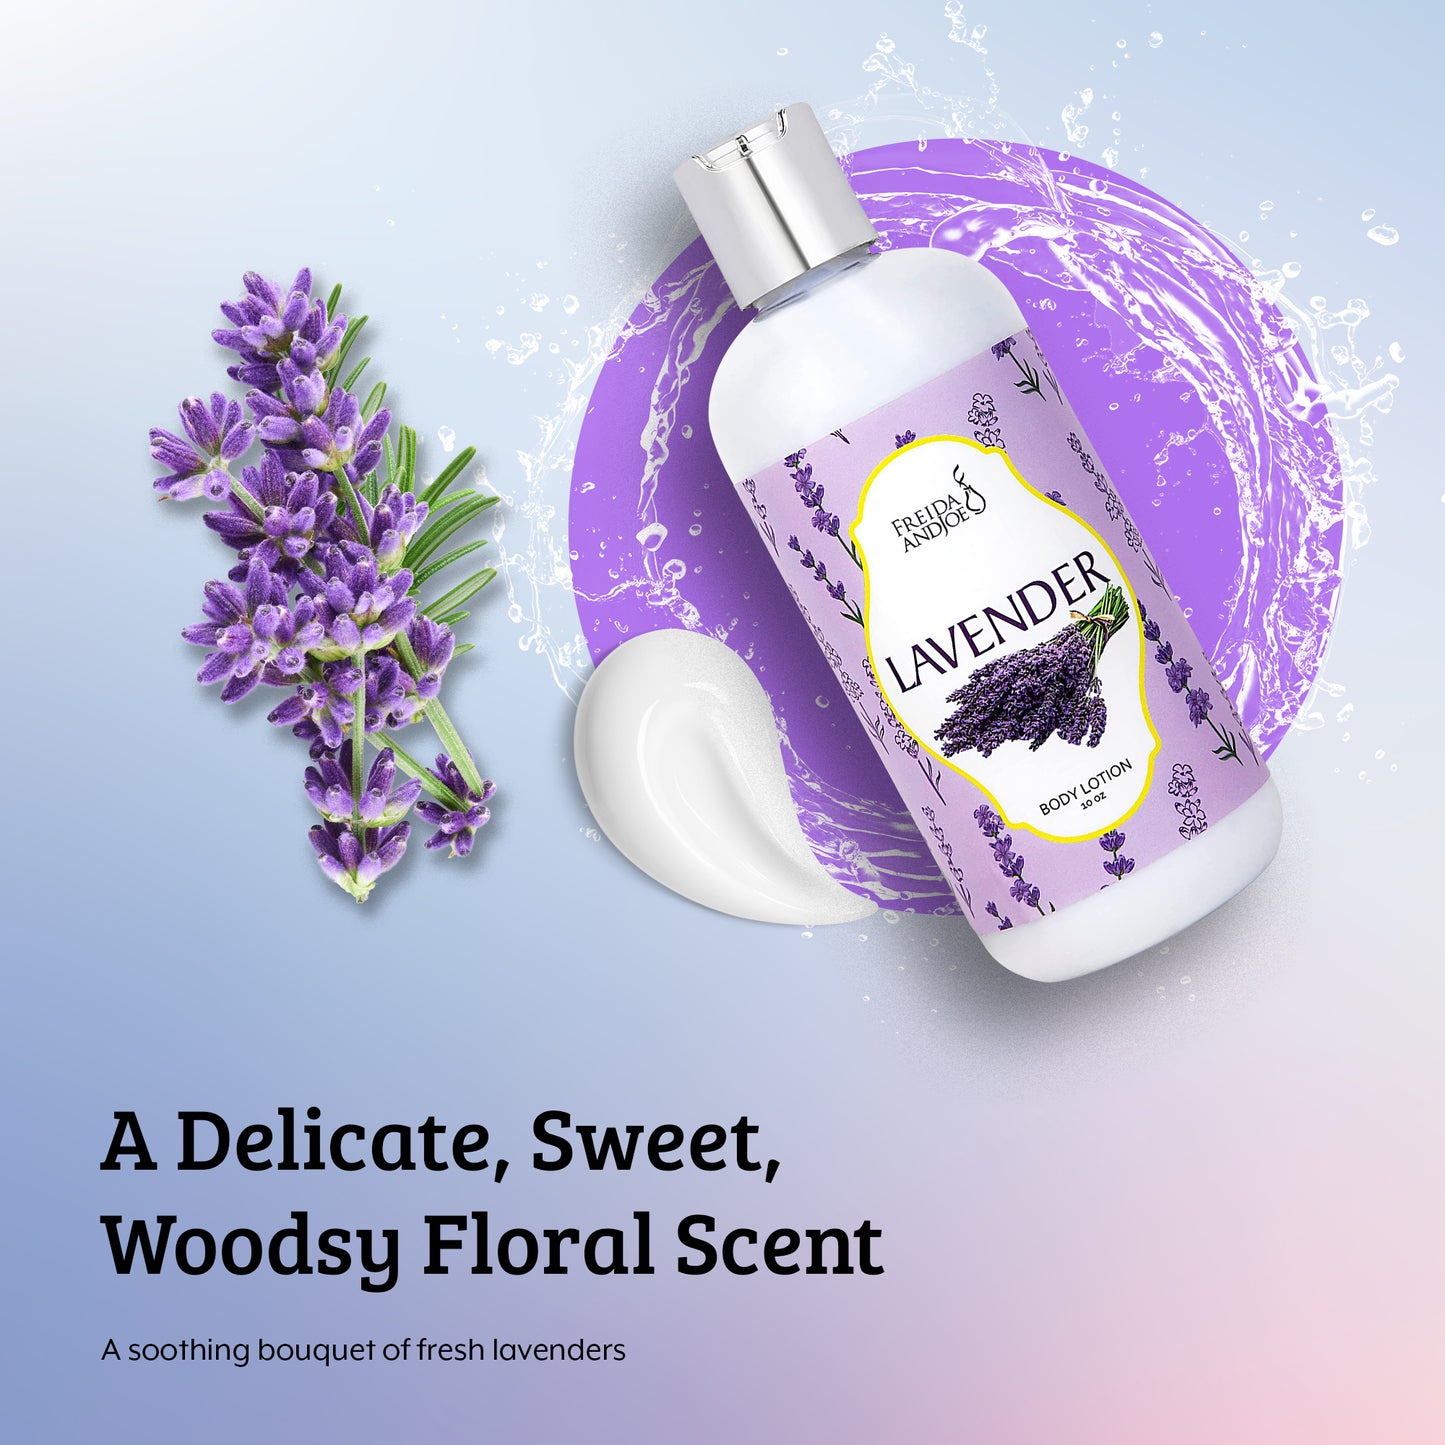 Lavender Fragrance Body Lotion in 10oz Bottle